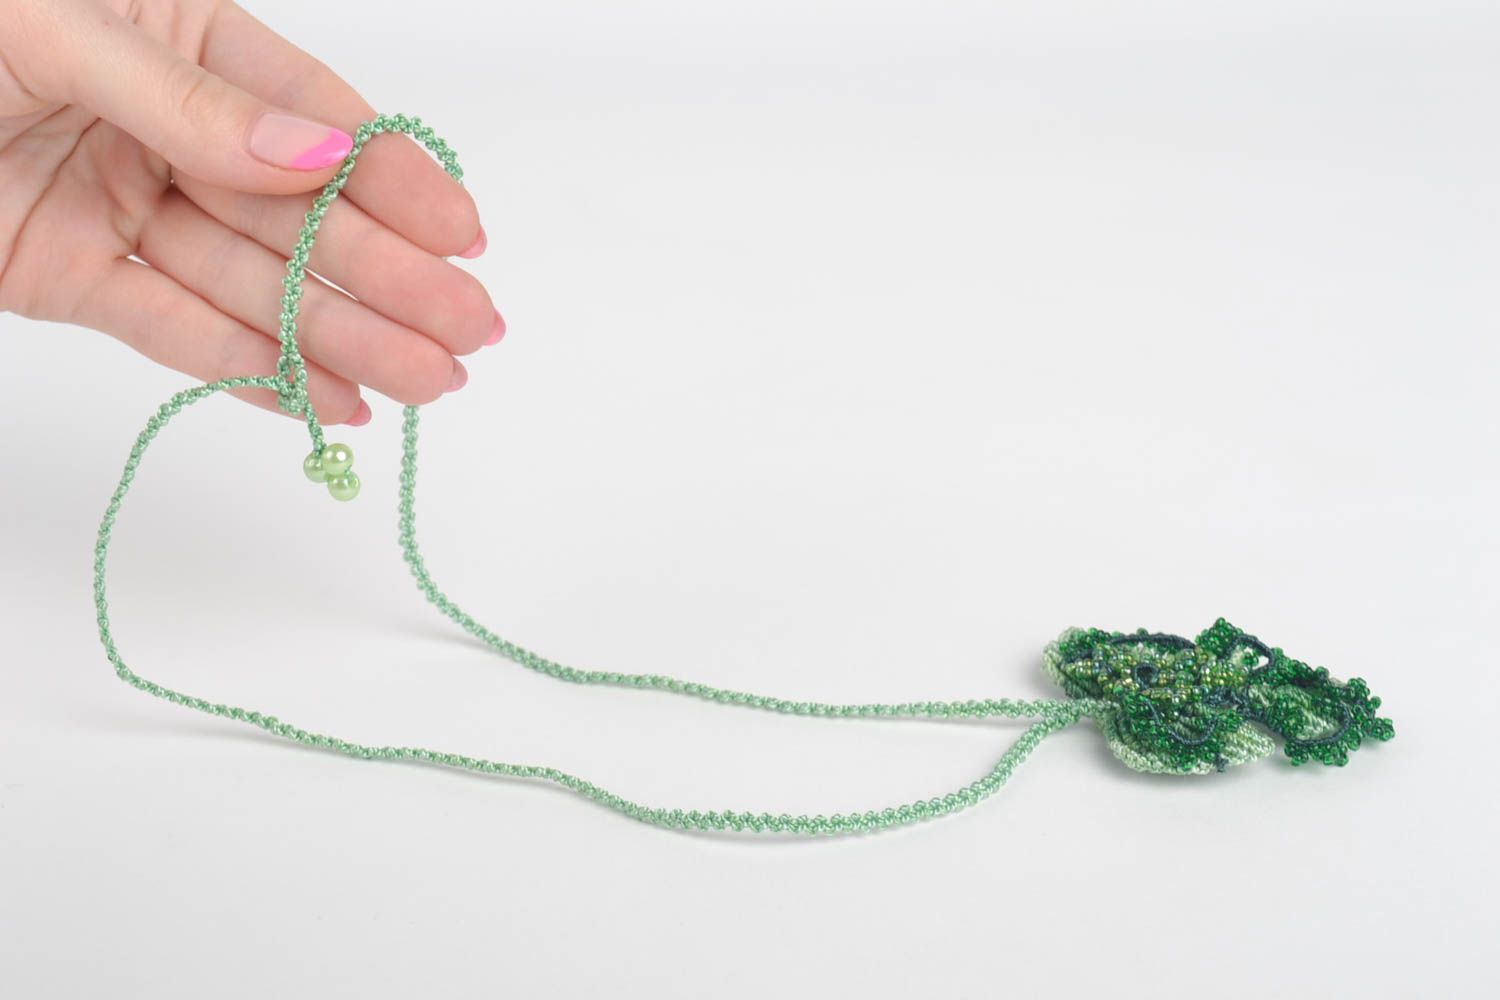 Handmade pendant designer pendant beaded pendant beads jewelry unusual gift photo 5